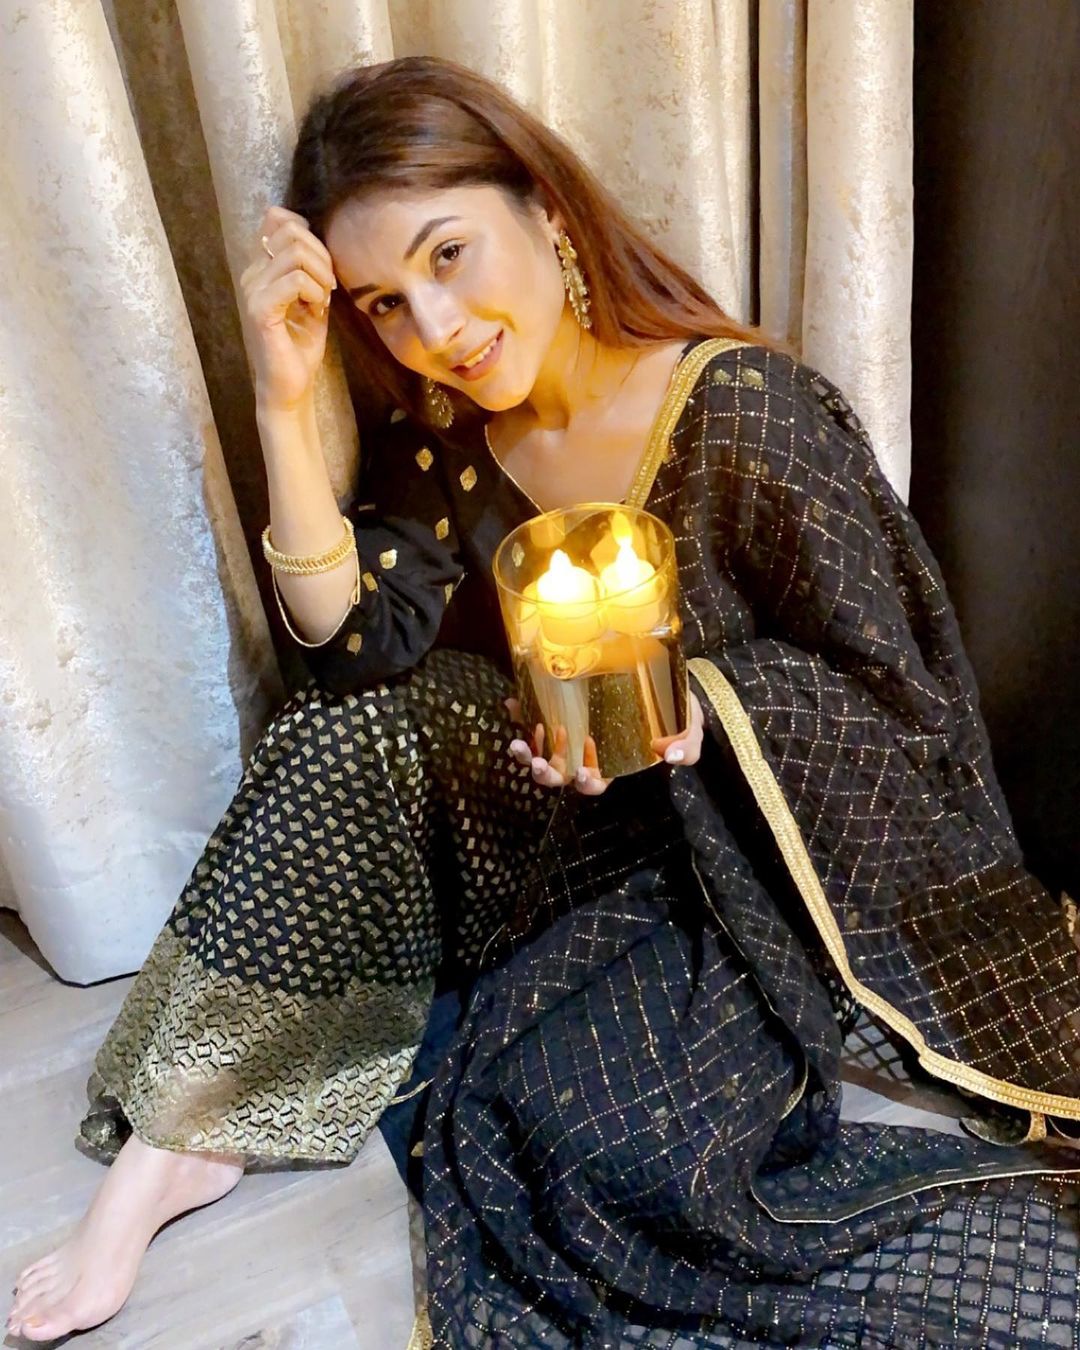 PICS: Bigg Boss 13's Shehnaaz Gill Wears Fan-Gifted Dress On Diwali; Sidharth Shukla Looks Dapper In Black